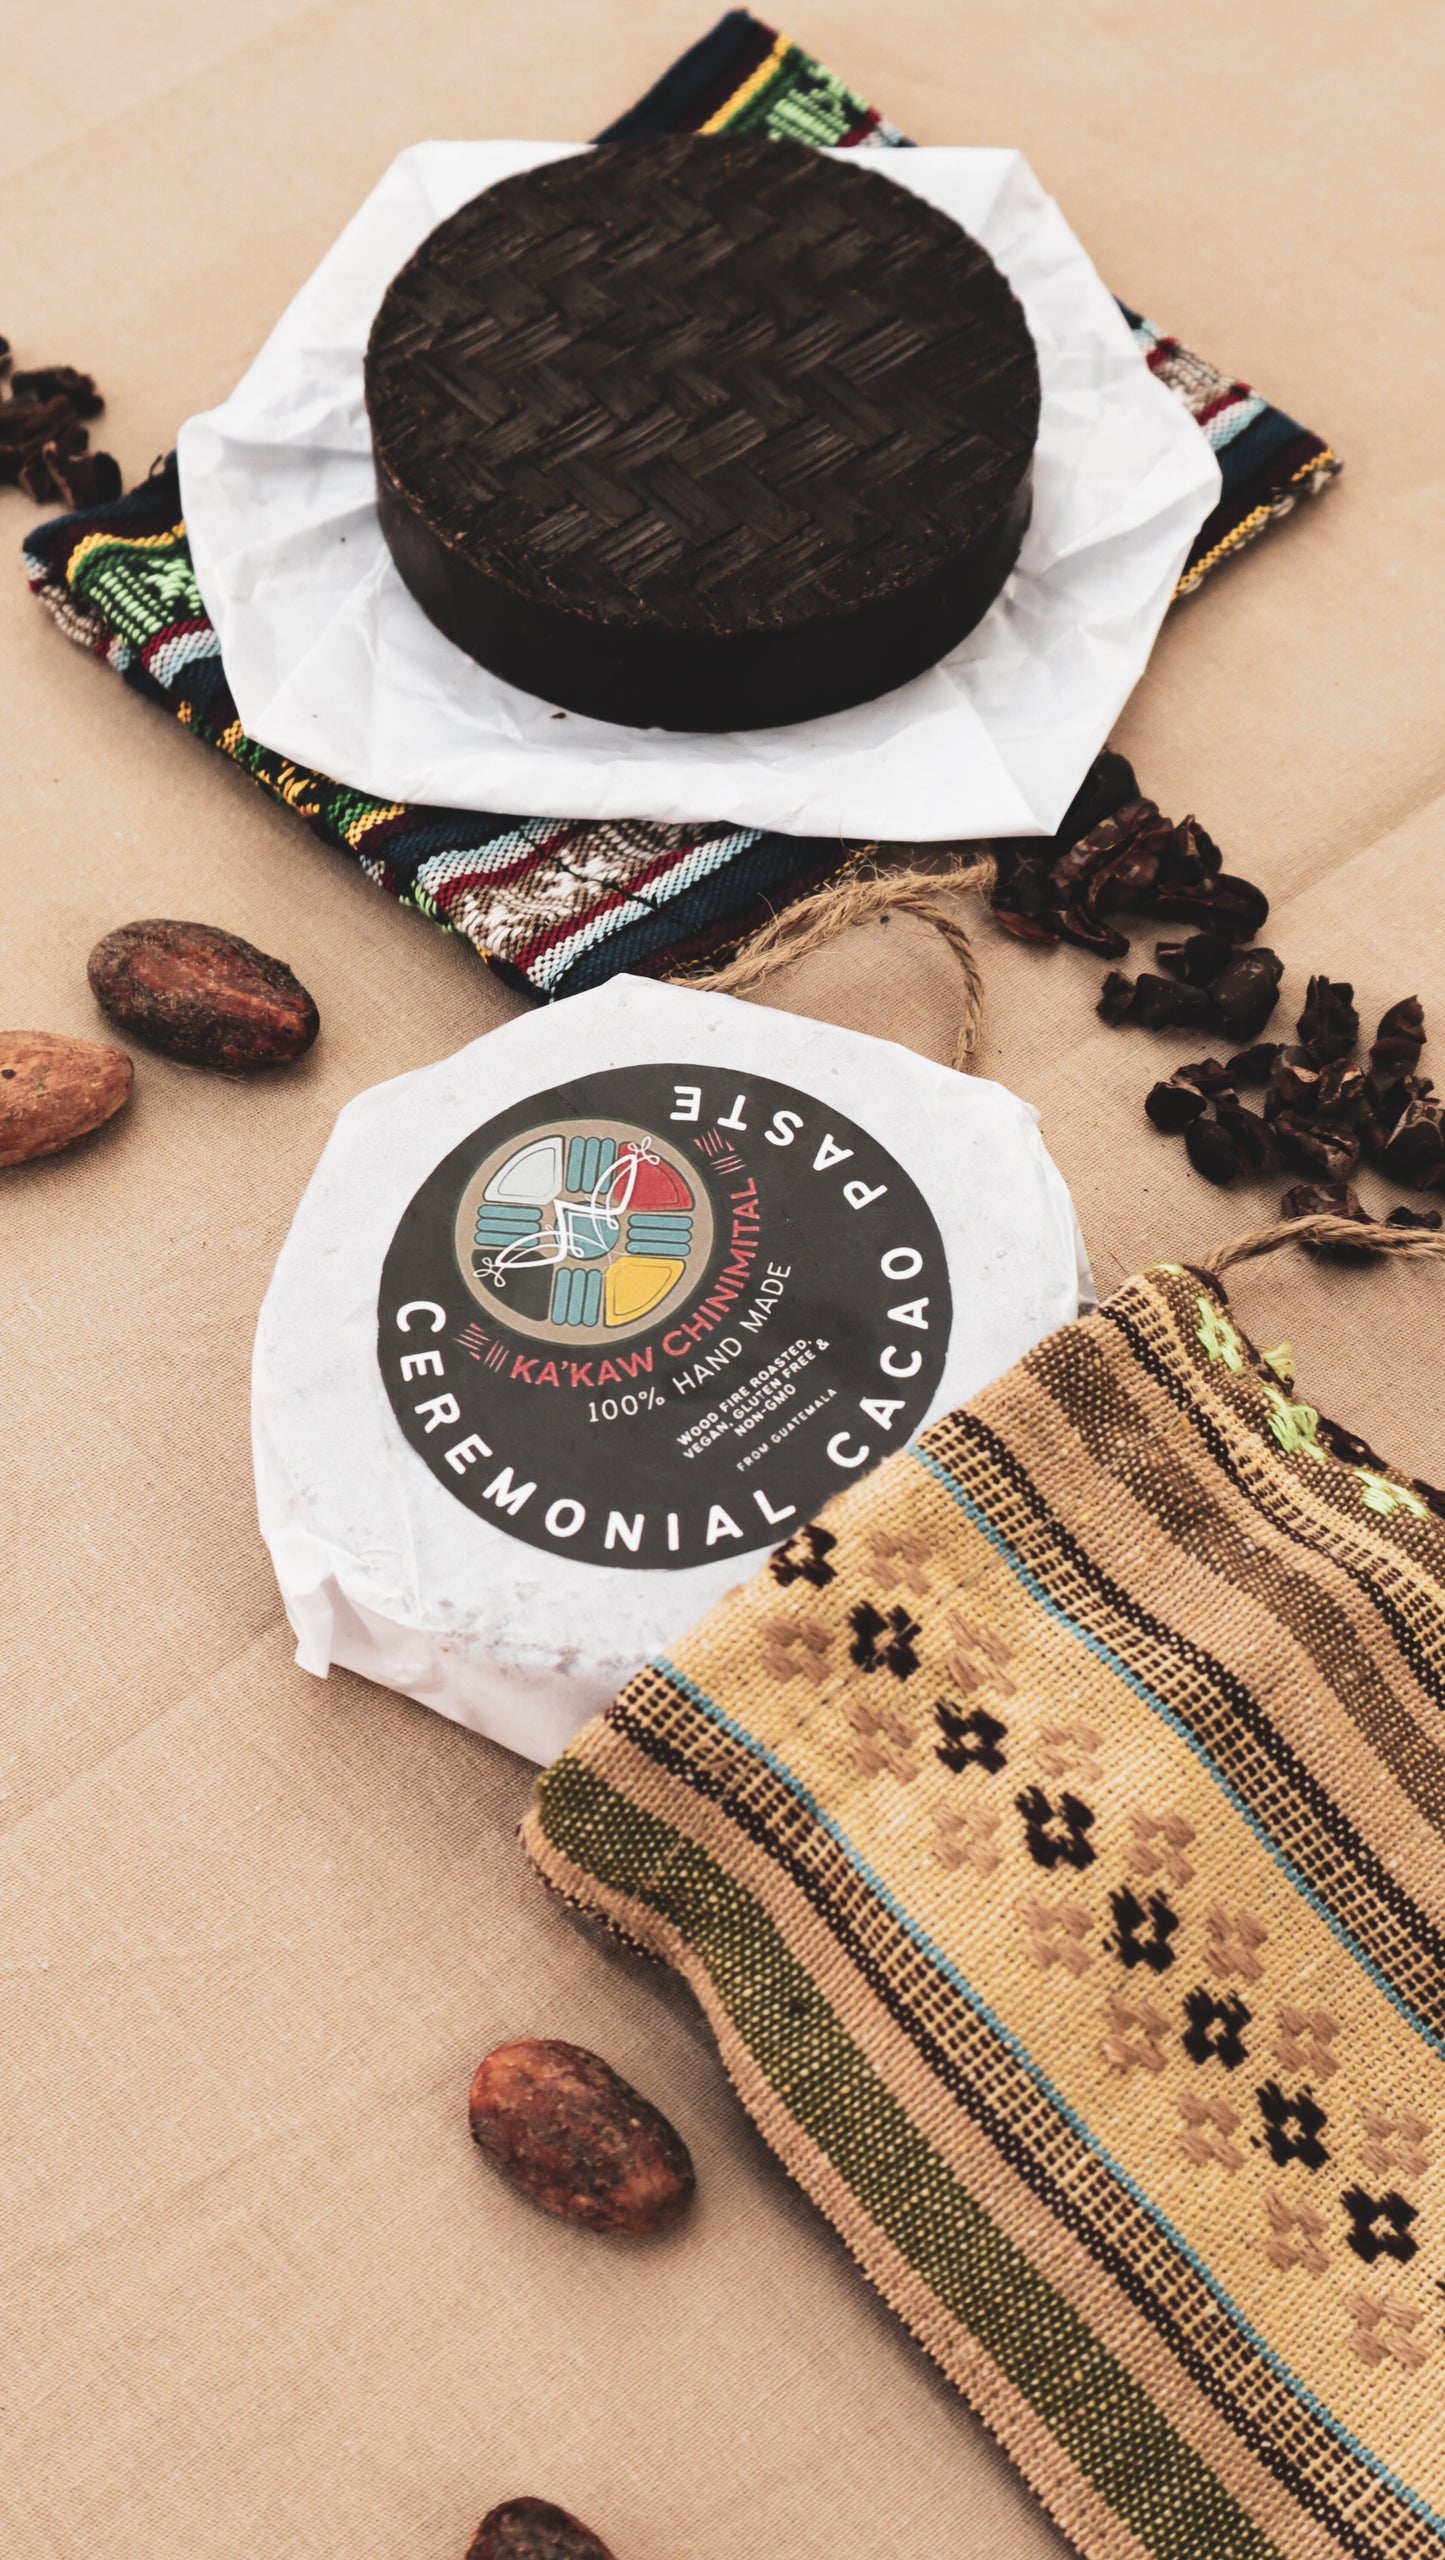 Ka'kaw Chinimital Pure Ceremonial Cacao